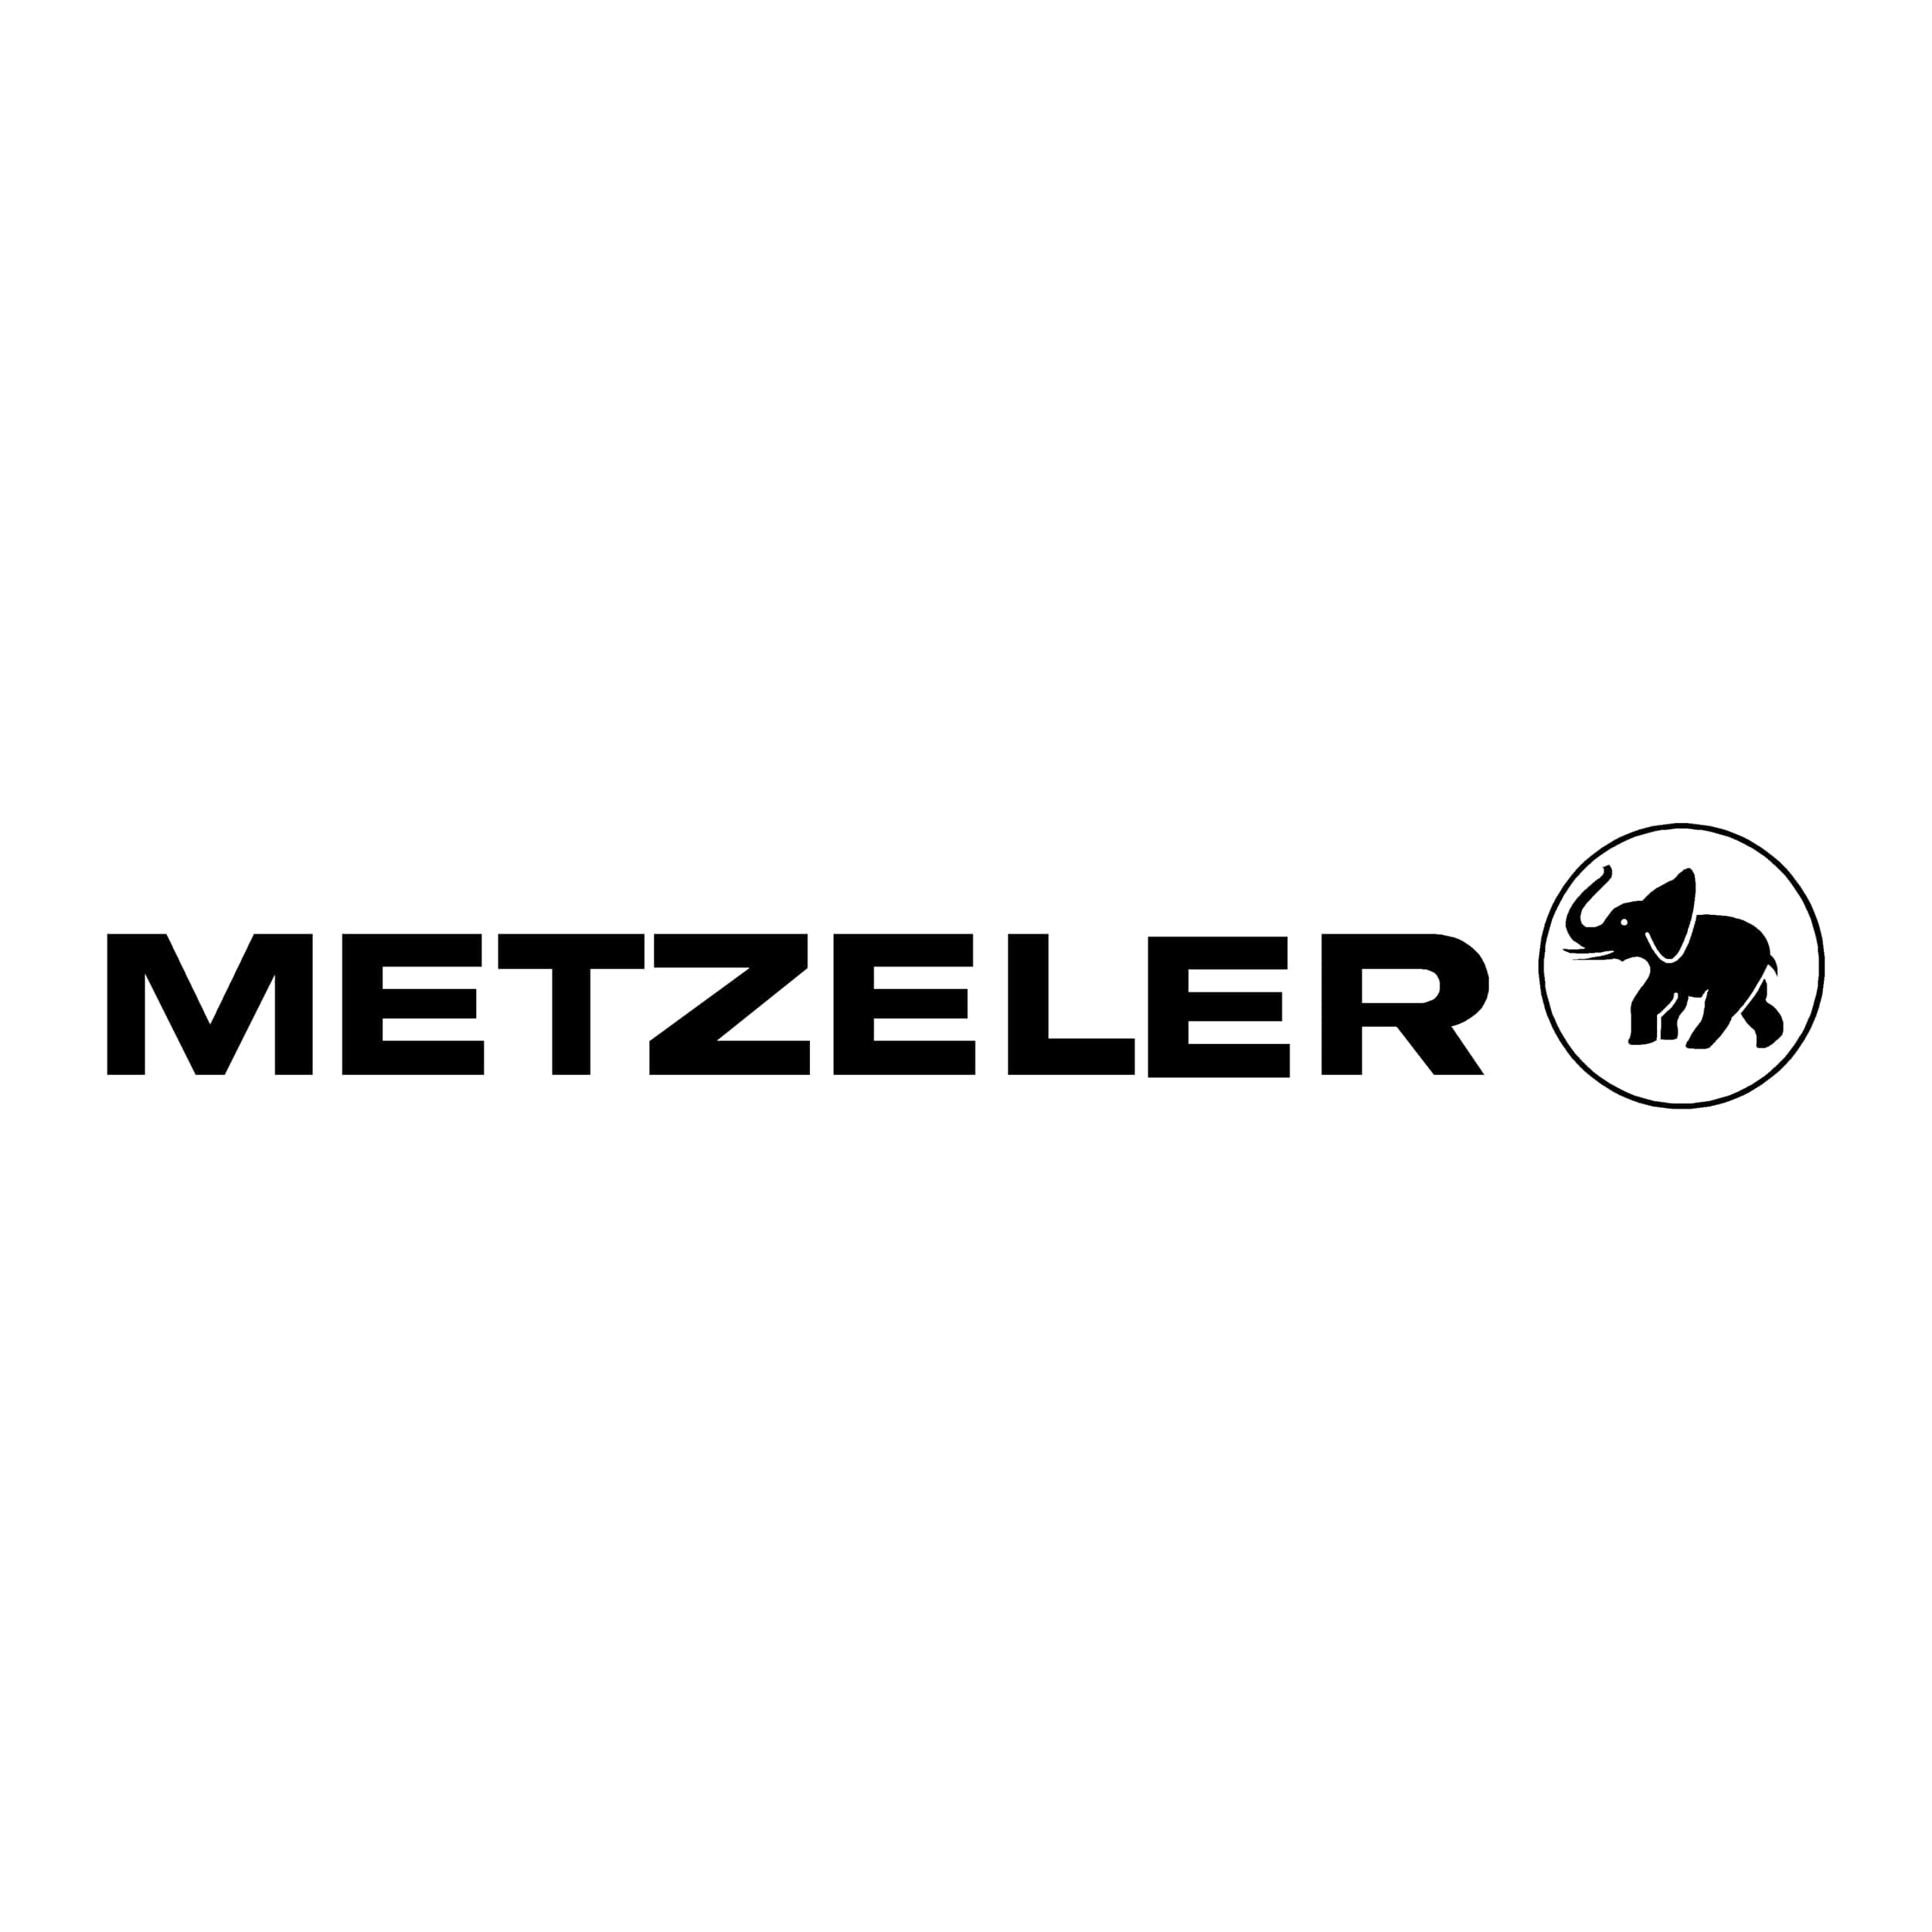 sticker-metzeler-ref-1-tuning-audio-sonorisation-car-auto-moto-camion-competition-deco-rallye-autocollant-min